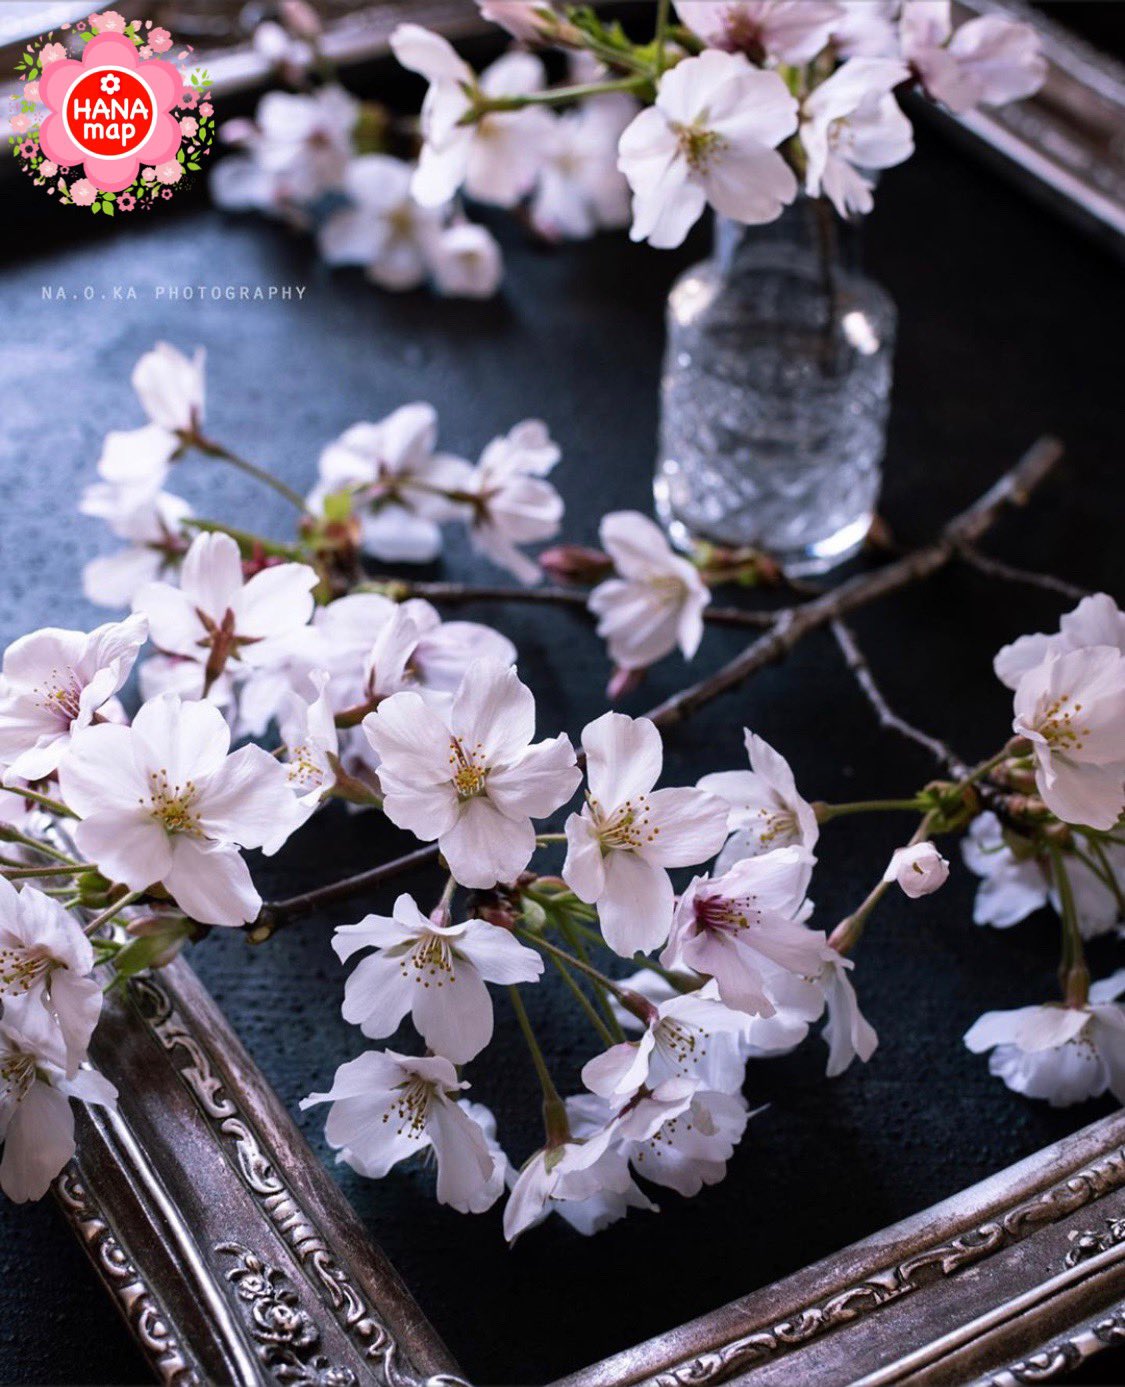 توییتر はなまっぷ 日本の美しい花風景 در توییتر Na O Ka さんの 花のある風景に花まるを 人々の心にも花が咲く日本の美しい春をありがとうございます サクラの花言葉 優美な女性 精神の美 T Co Clyl9hb6tm T Co 7vkzzhcabu